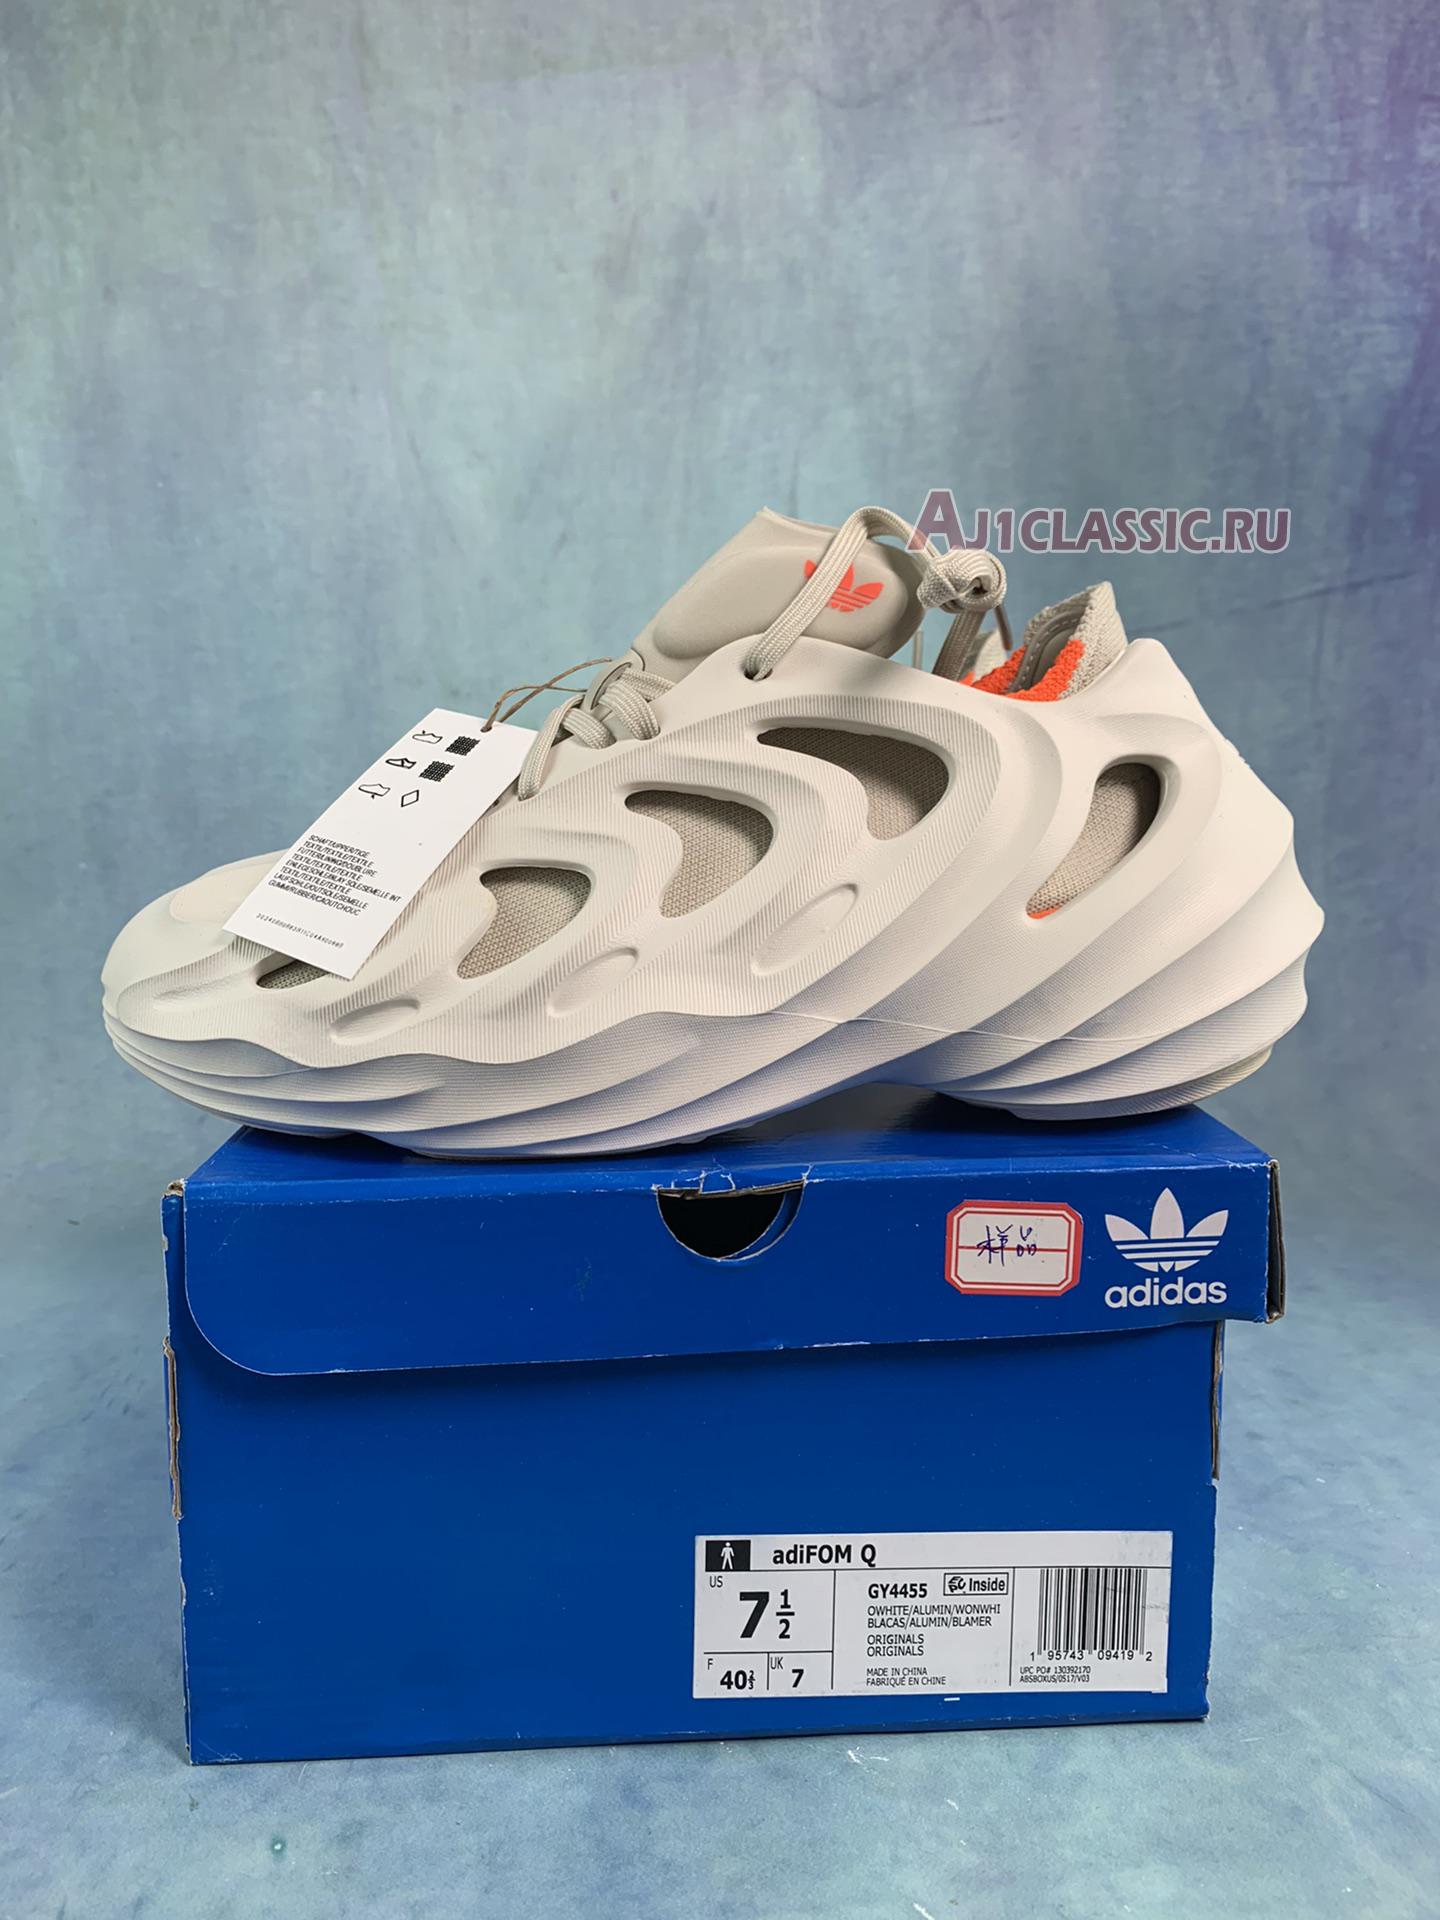 Adidas adiFOM Q Off-White GY4455 Off-White/Aluminium/Wonder White Sneakers